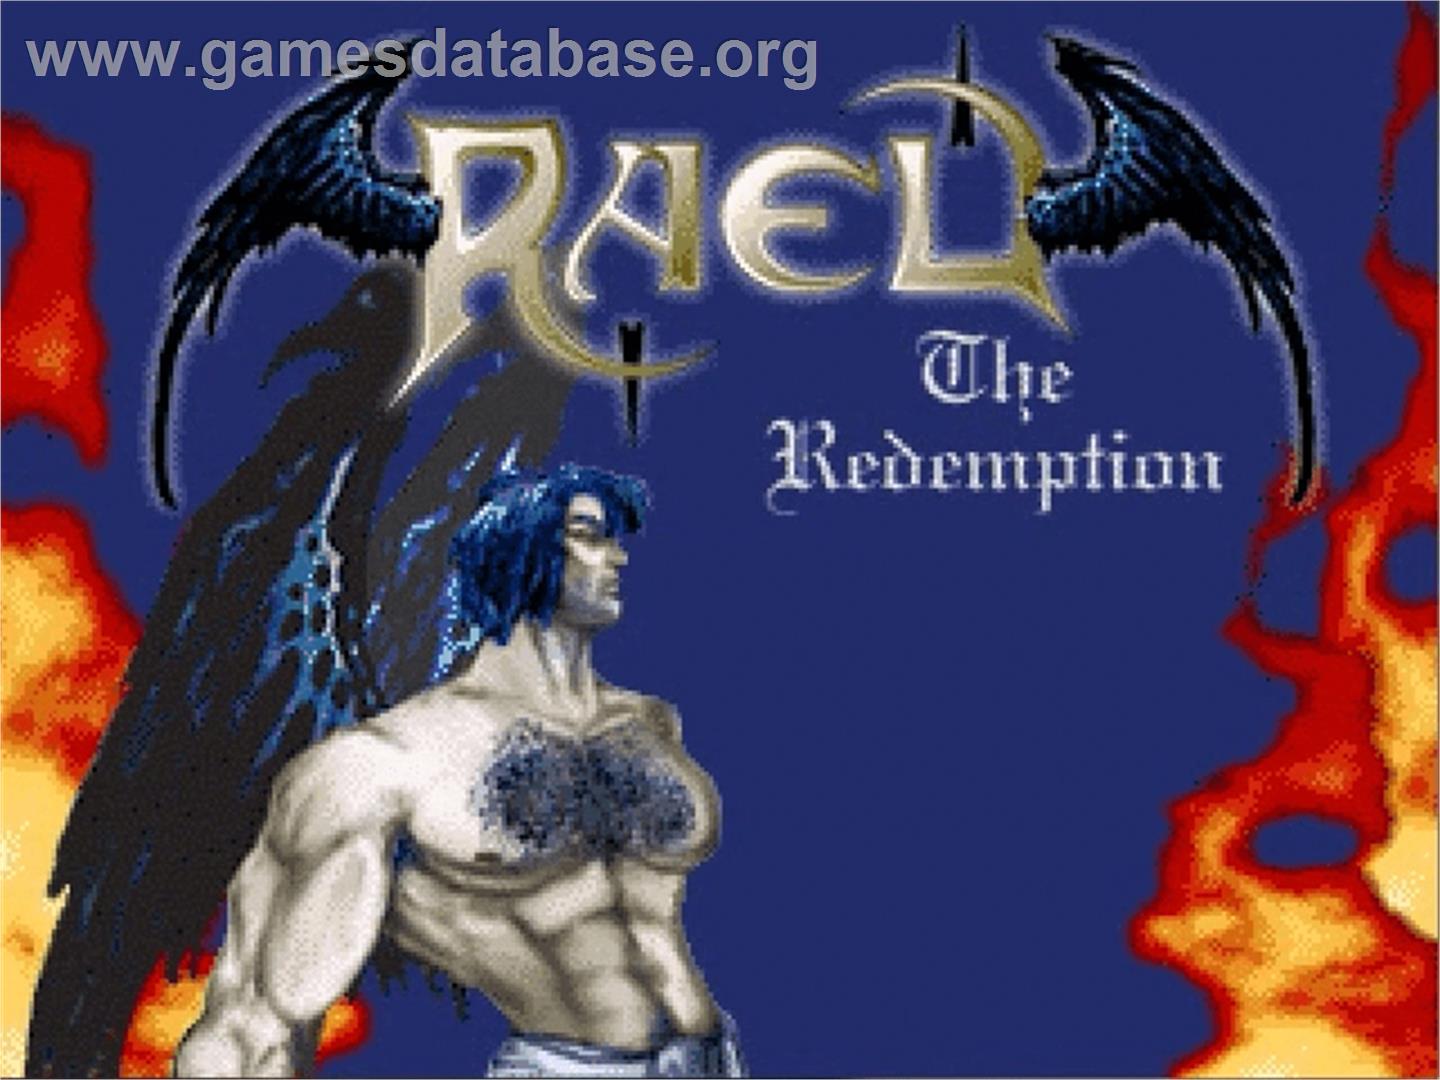 Rael - The Redemption - OpenBOR - Artwork - Title Screen